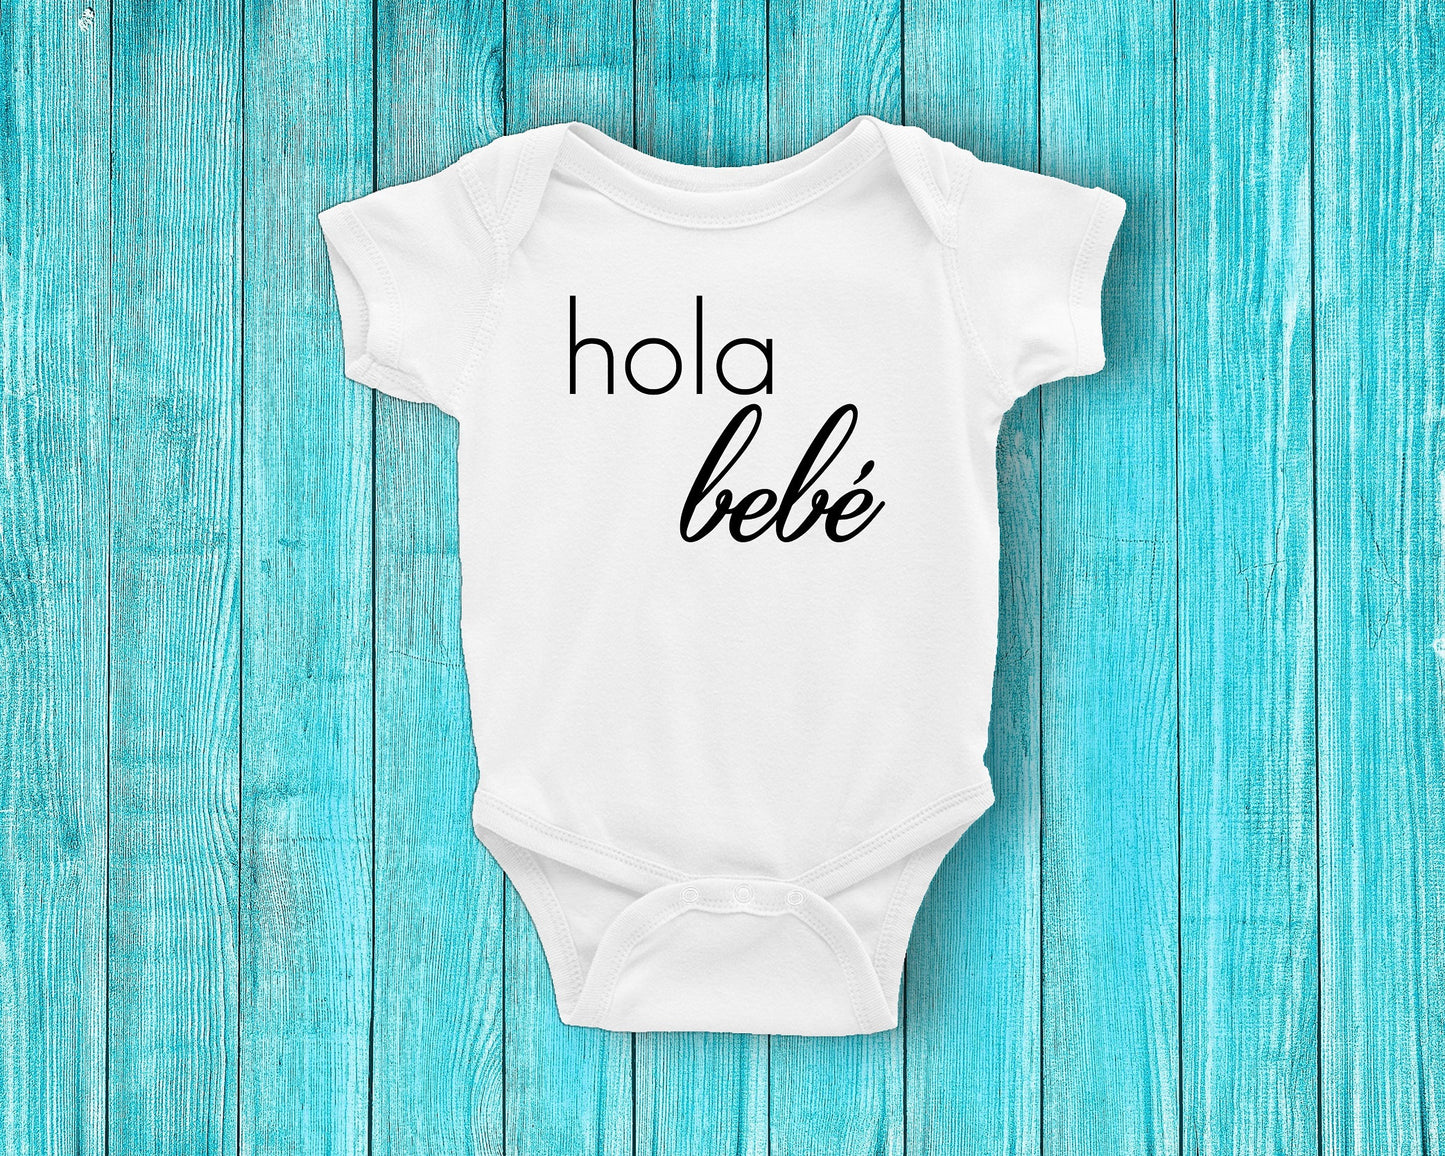 hola bebe Infant Shirt or Bodysuit - Cute Baby Shirt - baby shower gift - spanish baby shirt - vas a ser papá - mexican baby shower gift